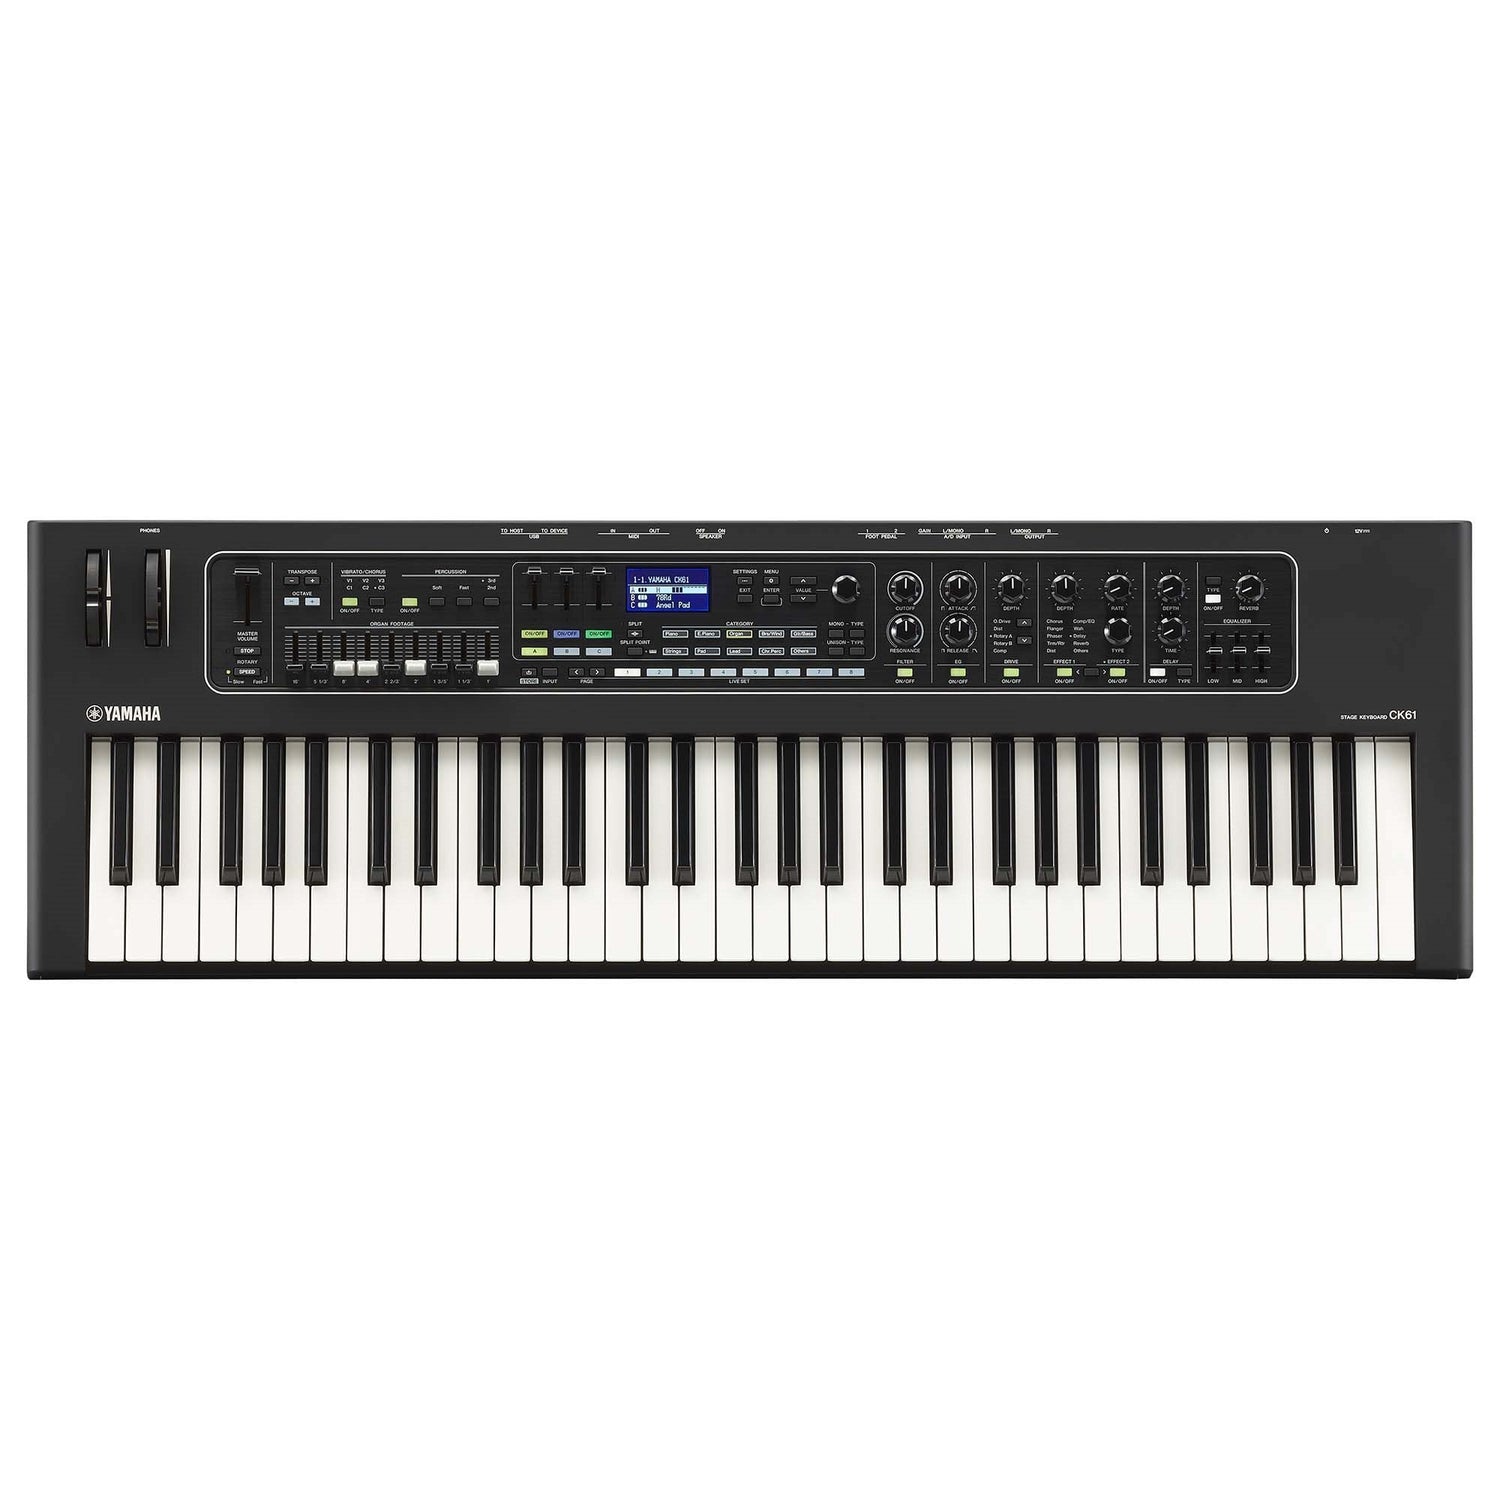 Yamaha Stage Keyboard